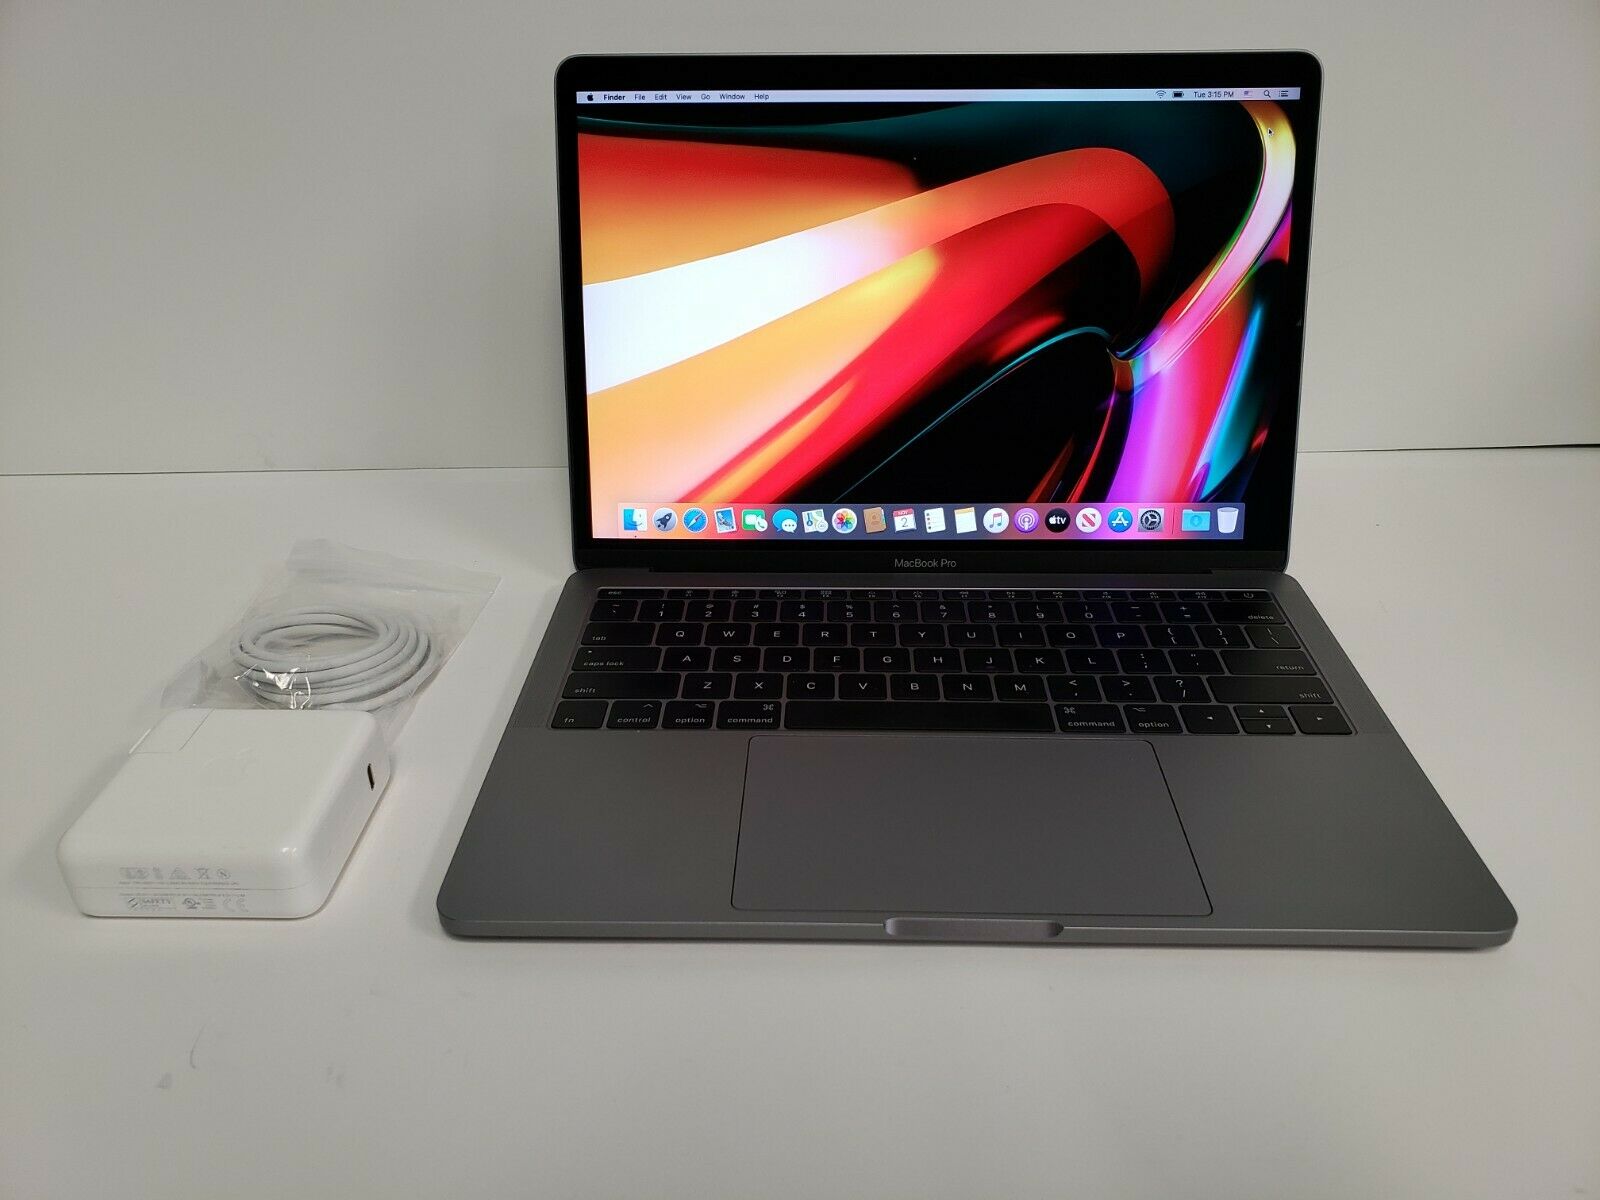 Apple MacBook Pro 13 Laptop - Space Gray - 2017-2018 - 2.3GHz i5 - SSD - RETINA